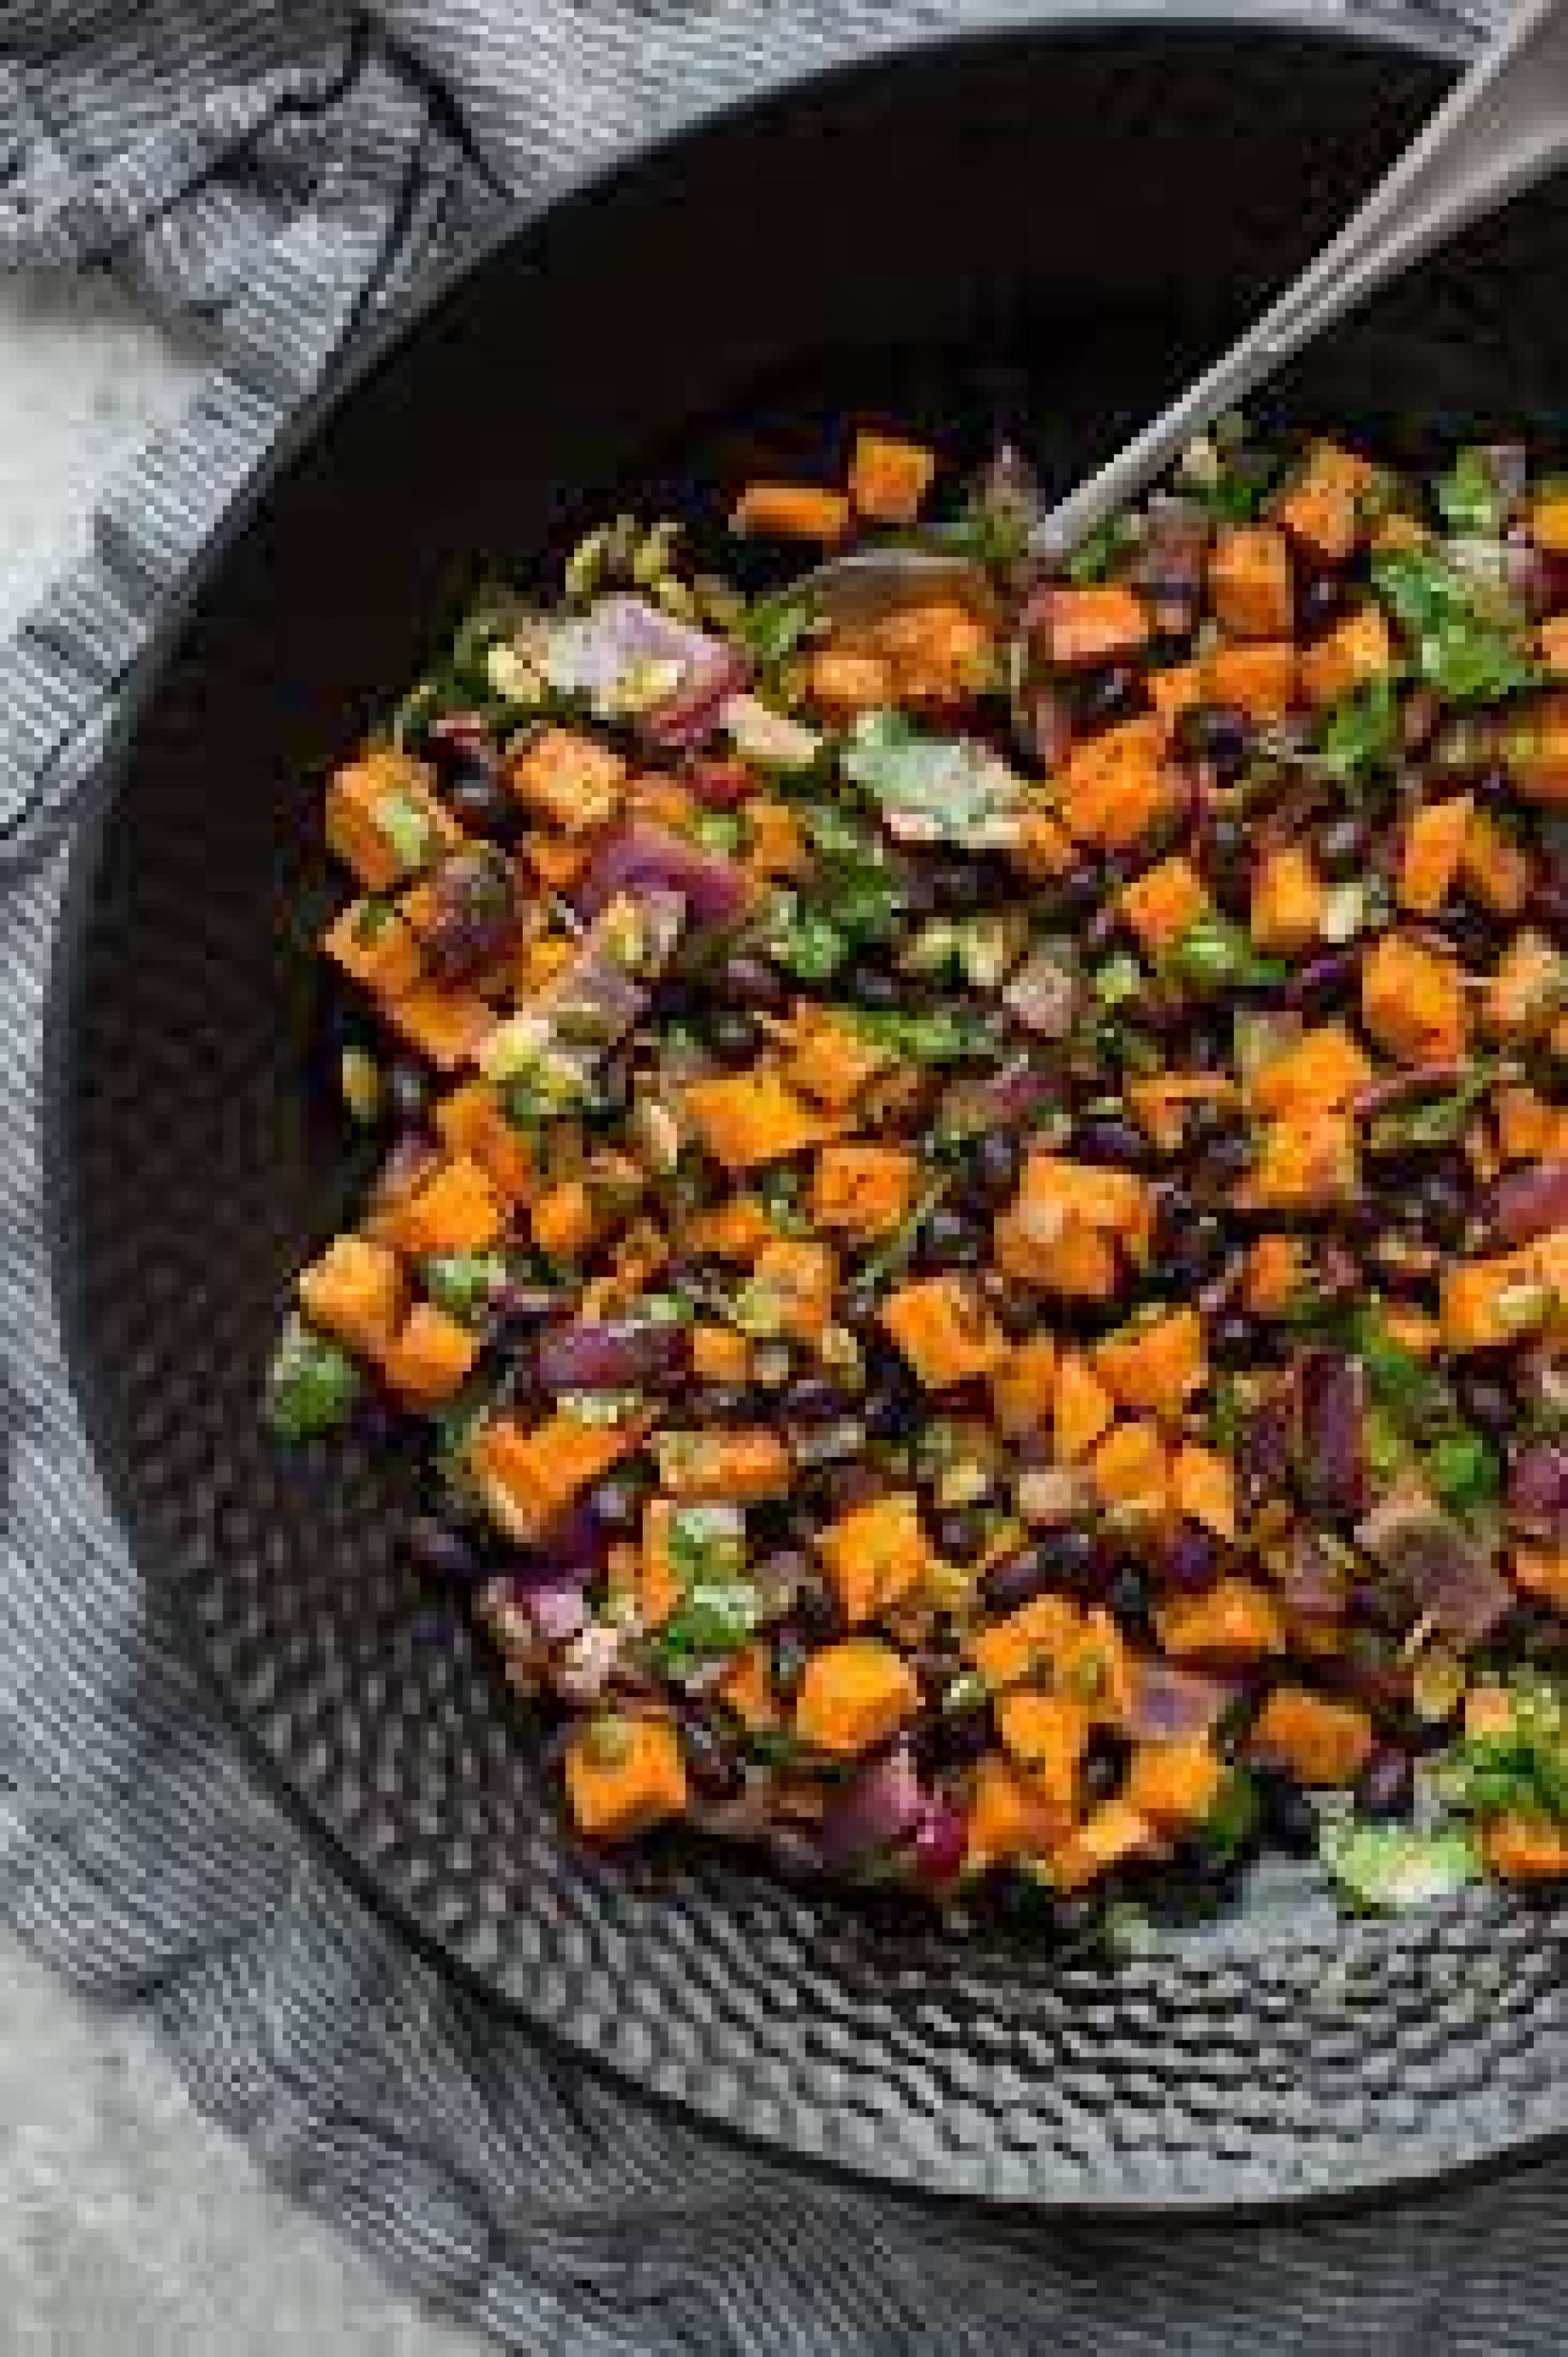 Vegetarian) Zesty Black Bean & Sweet Potato Bowl